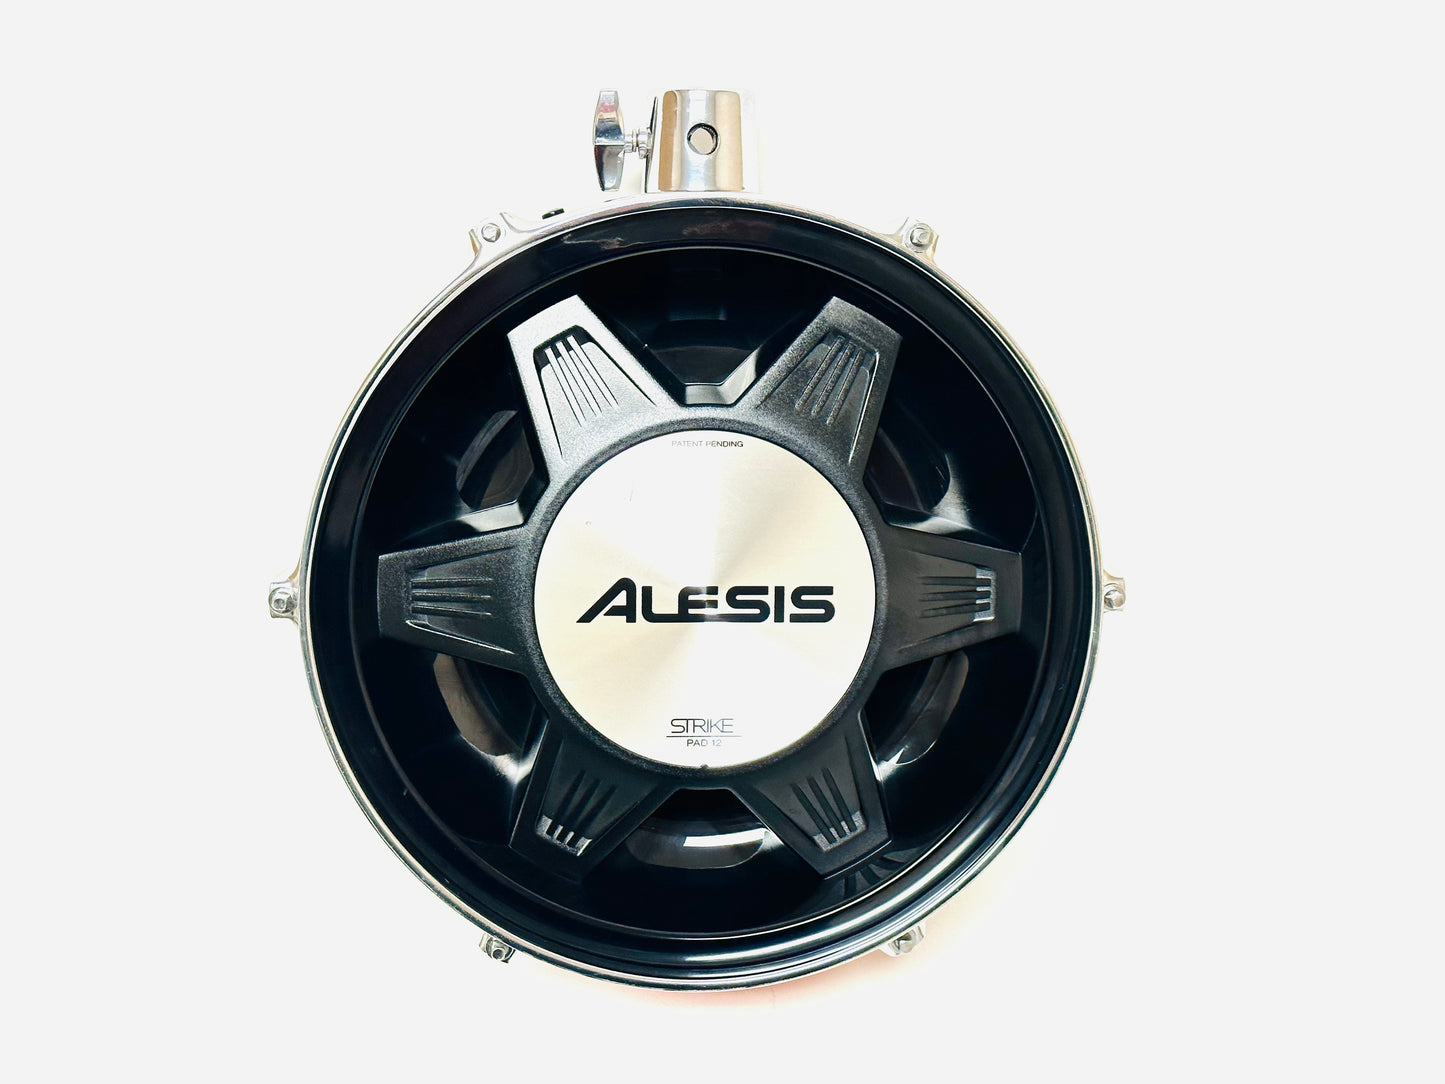 Alesis Strike Pro 12” Mesh Tom Drum pad mount an cable